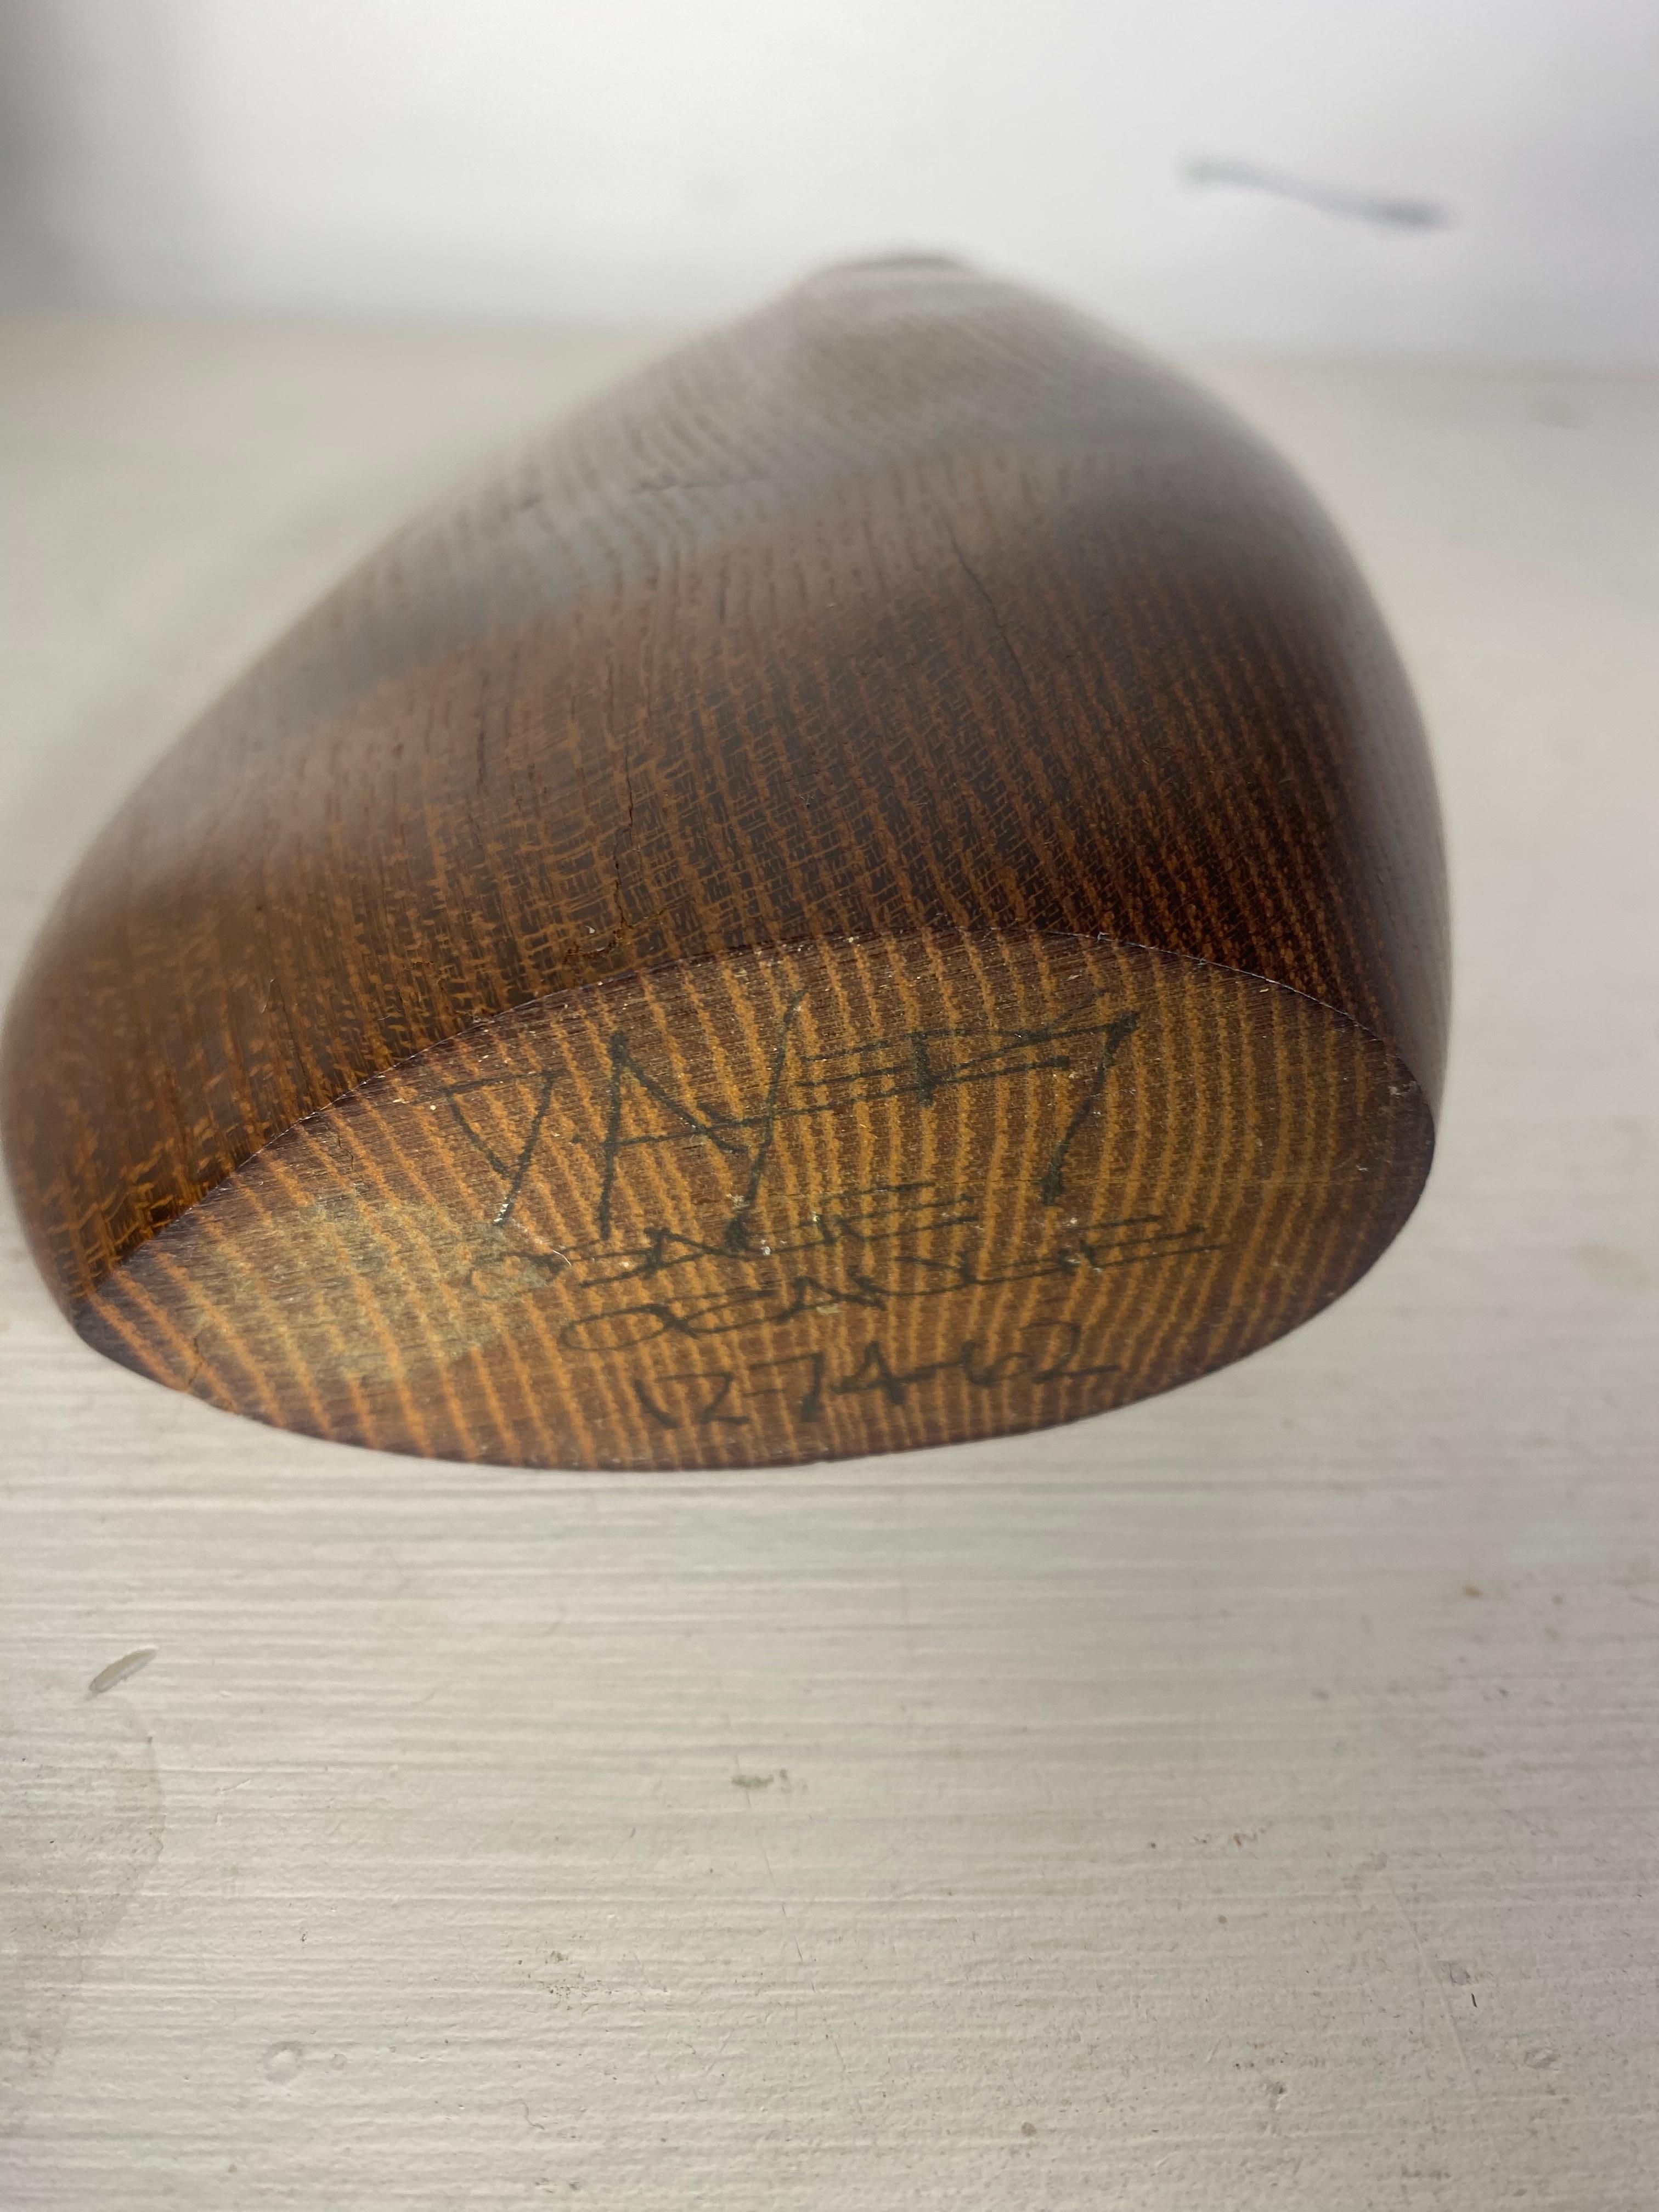 Modernist walnut biomorphic vase by California Designer Craftsman, Doug Ayers c. 1962, signed on base,,, Classic weed pot.. Wonderful sculpture,, Stunning wood graining..
